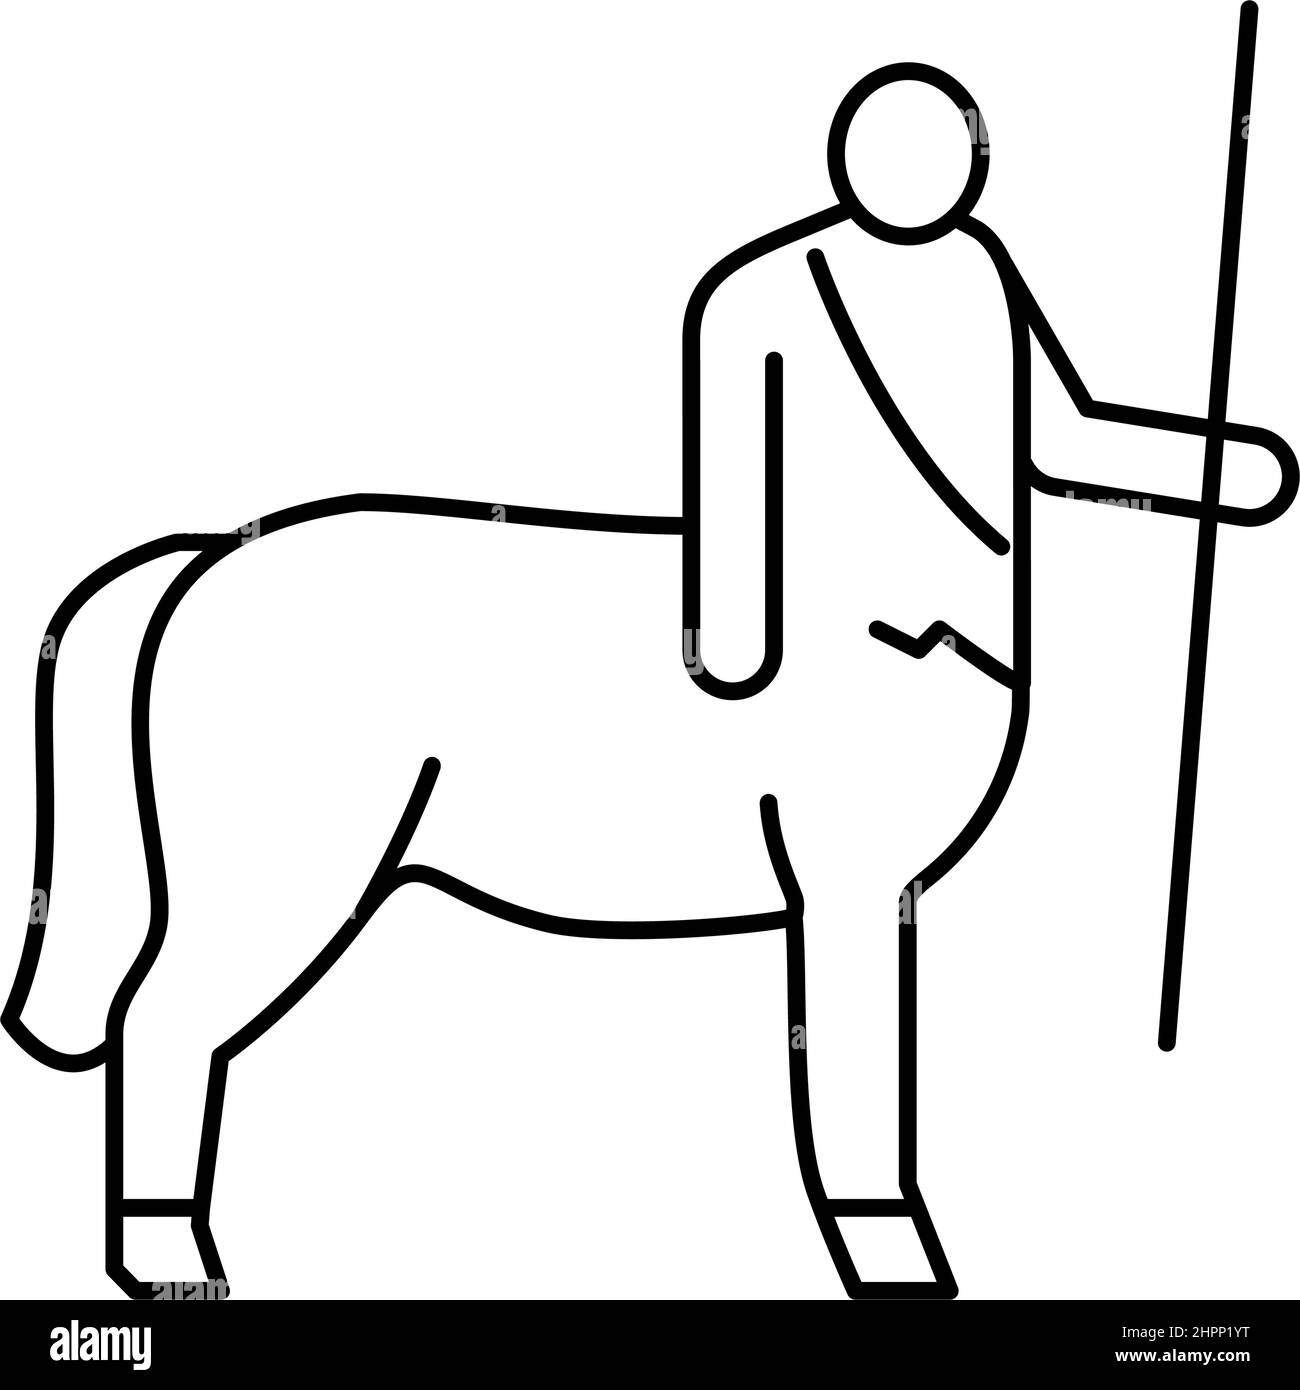 centaur ancient greece line icon vector illustration Stock Vector